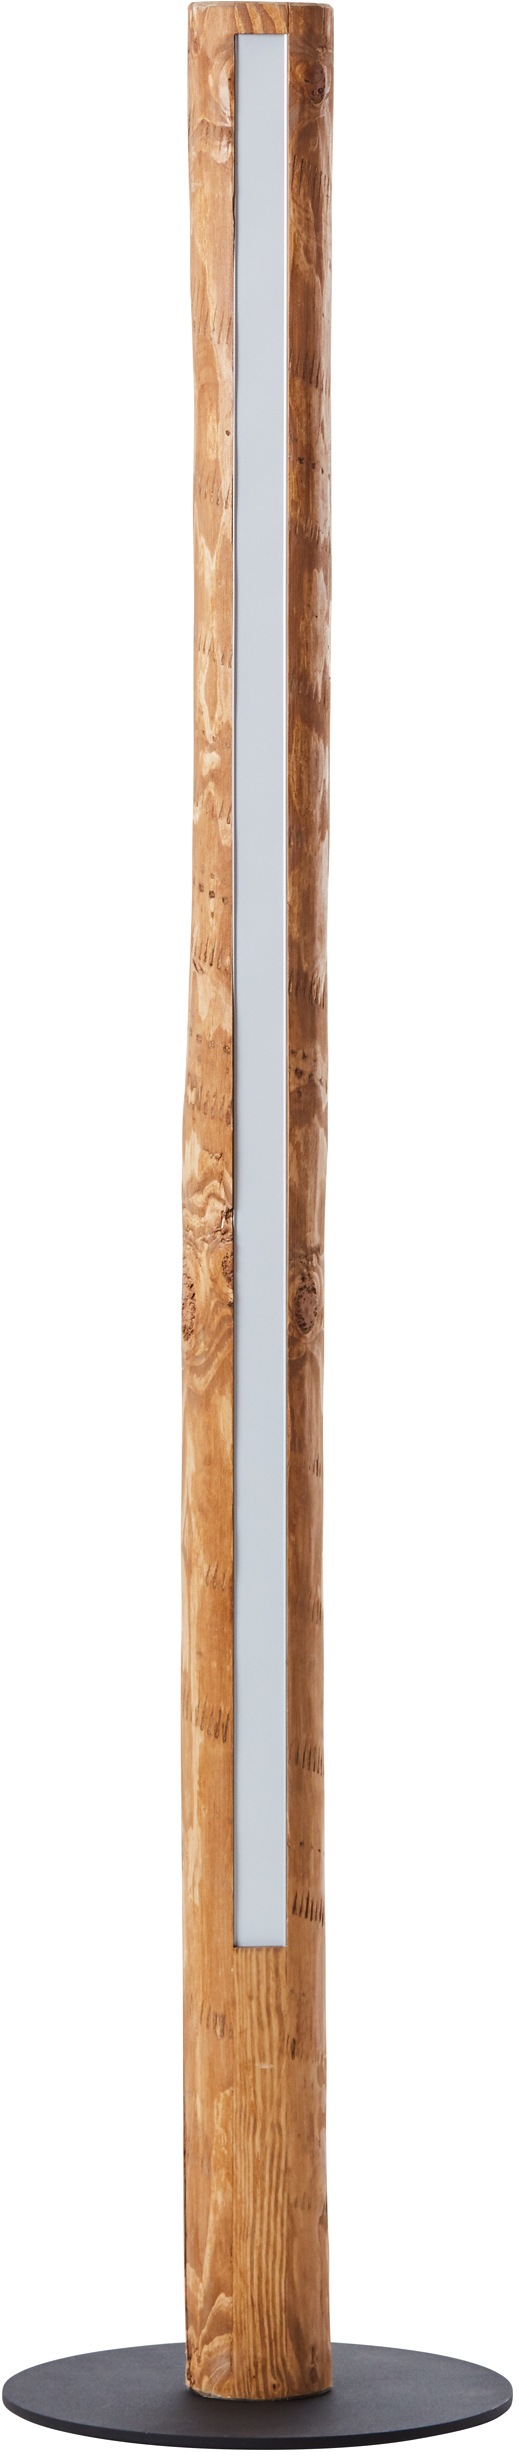 flammig-flammig, BAUR LED kiefer Stehlampe dimmbar, | warmweiß, 2900 cm, H Brilliant gebeizt »Odun«, 1 Holz/Metall, 141 lm,